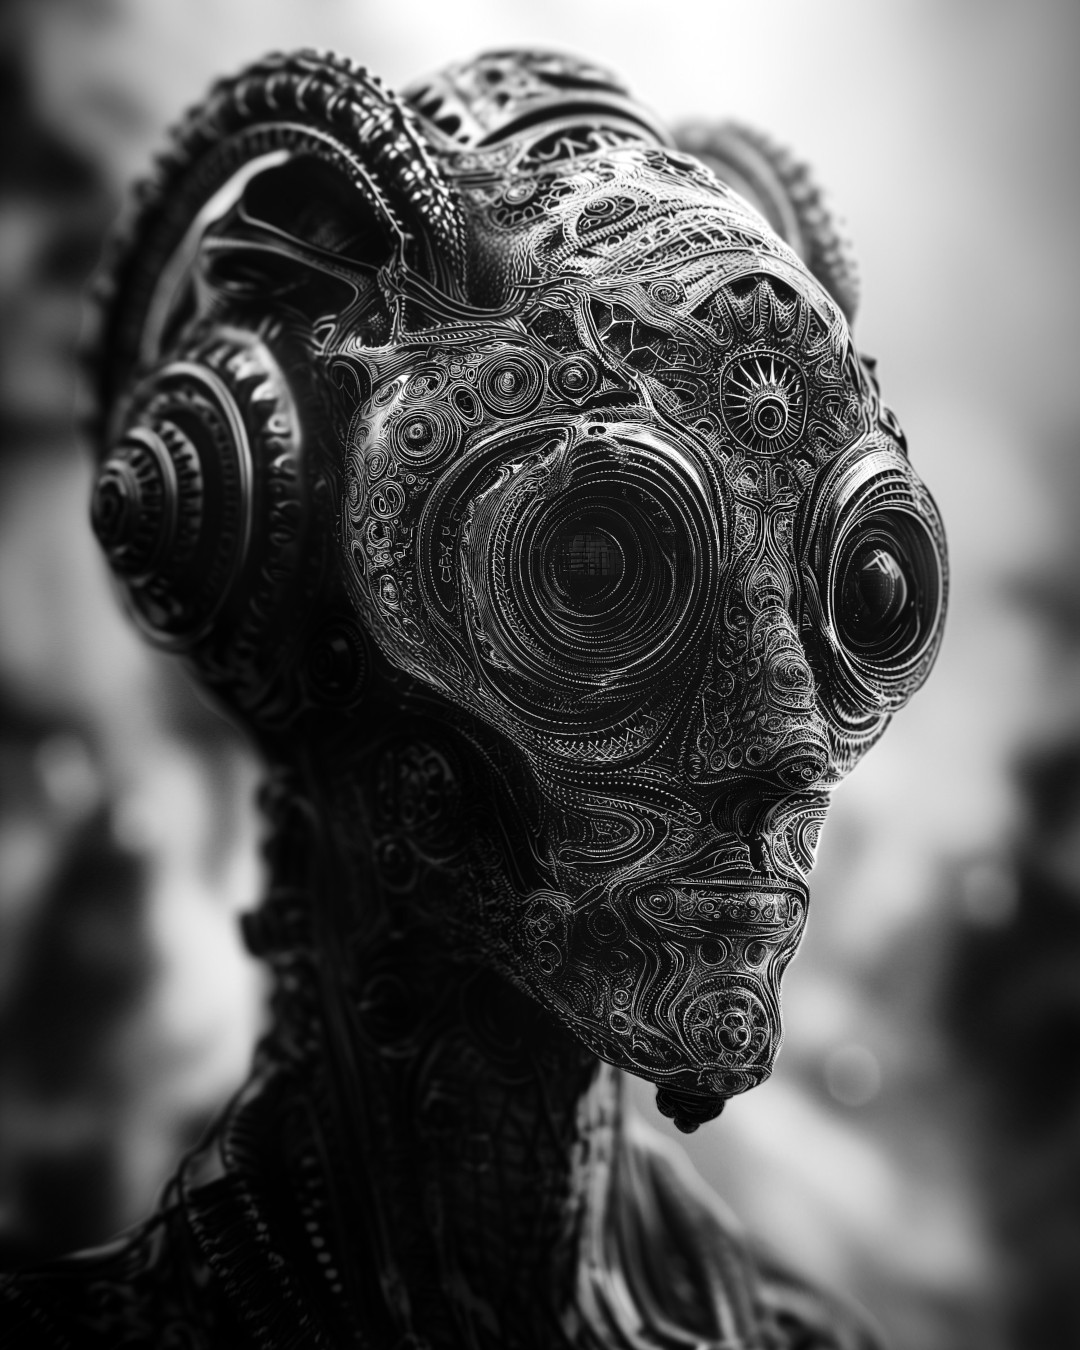 Humanoid robot, intricate detailing, black and white realism